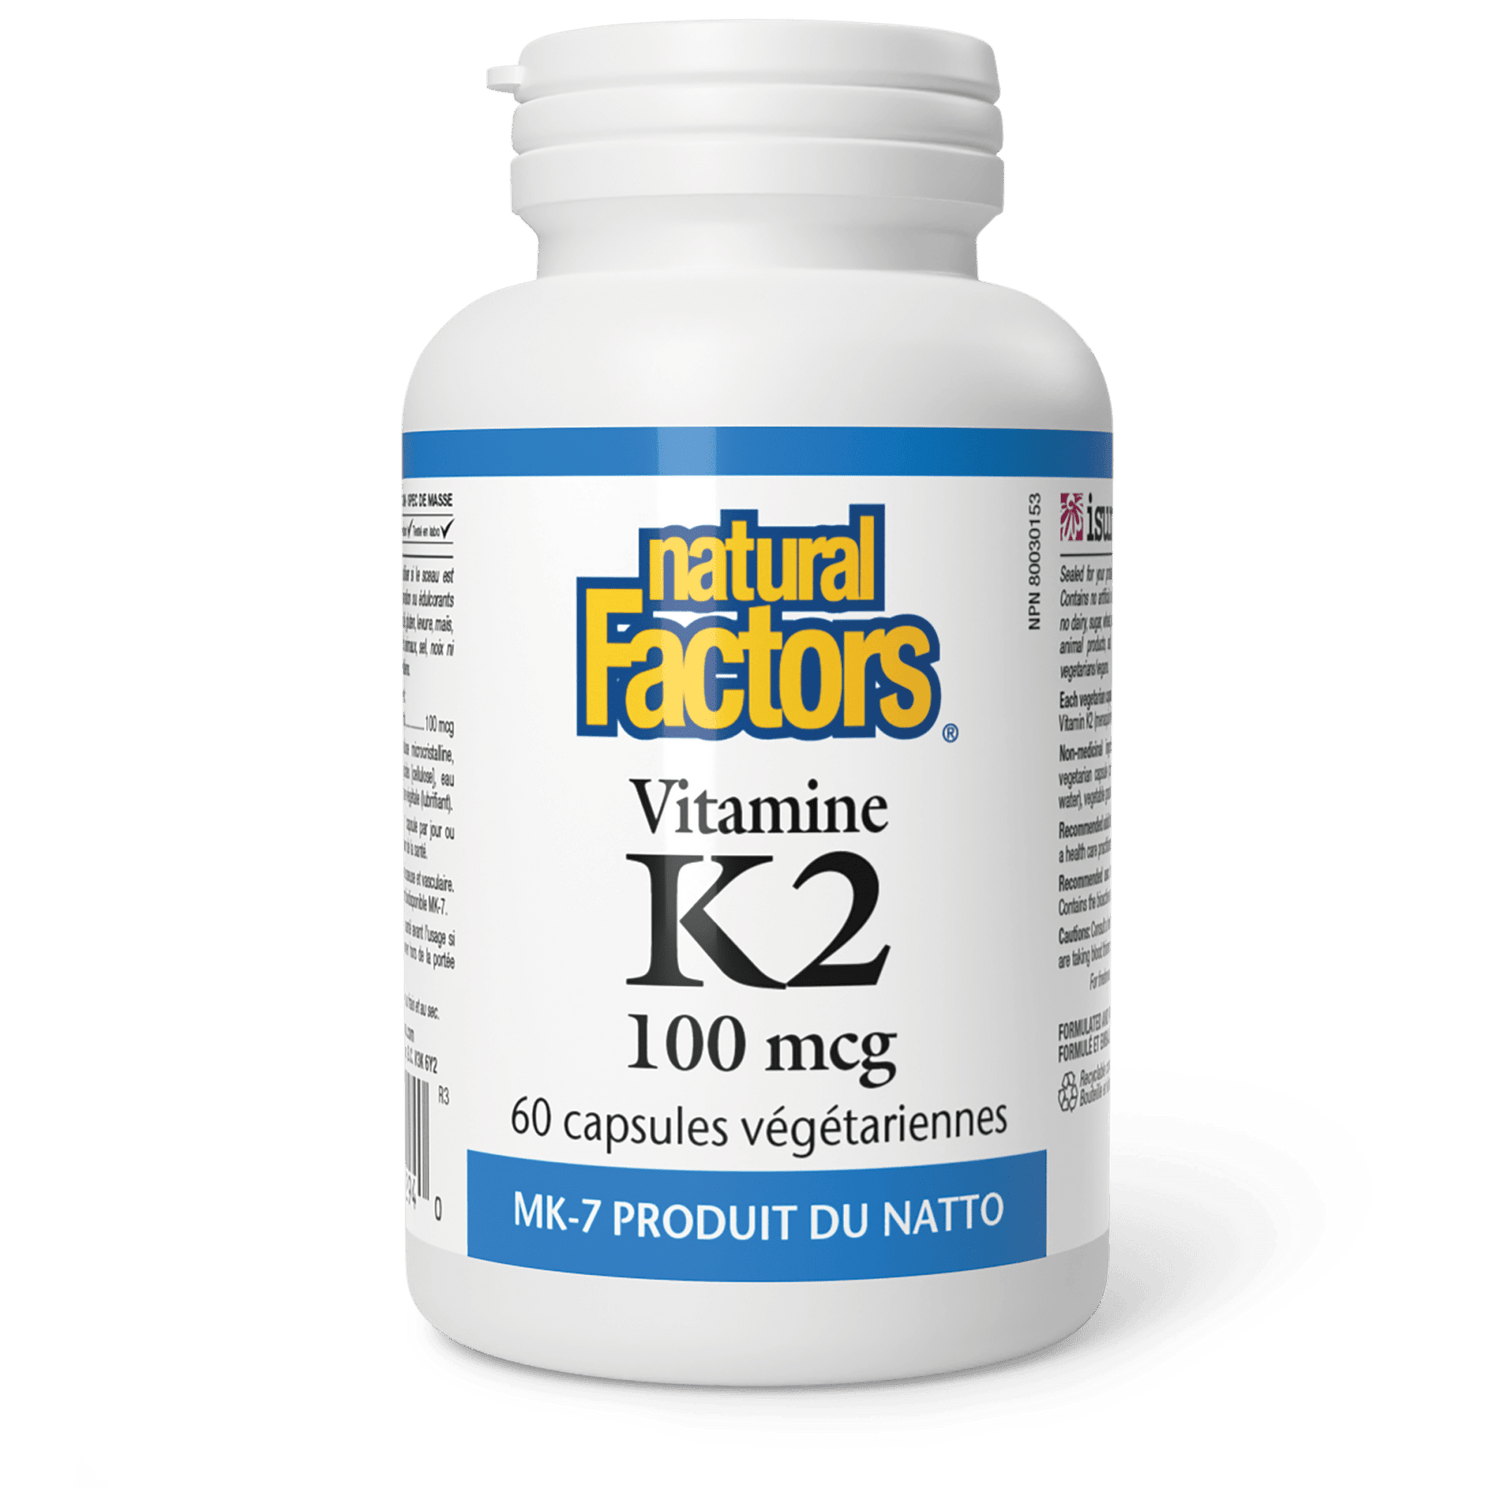 Vitamine K2 100 mcg, Natural Factors|v|image|1294